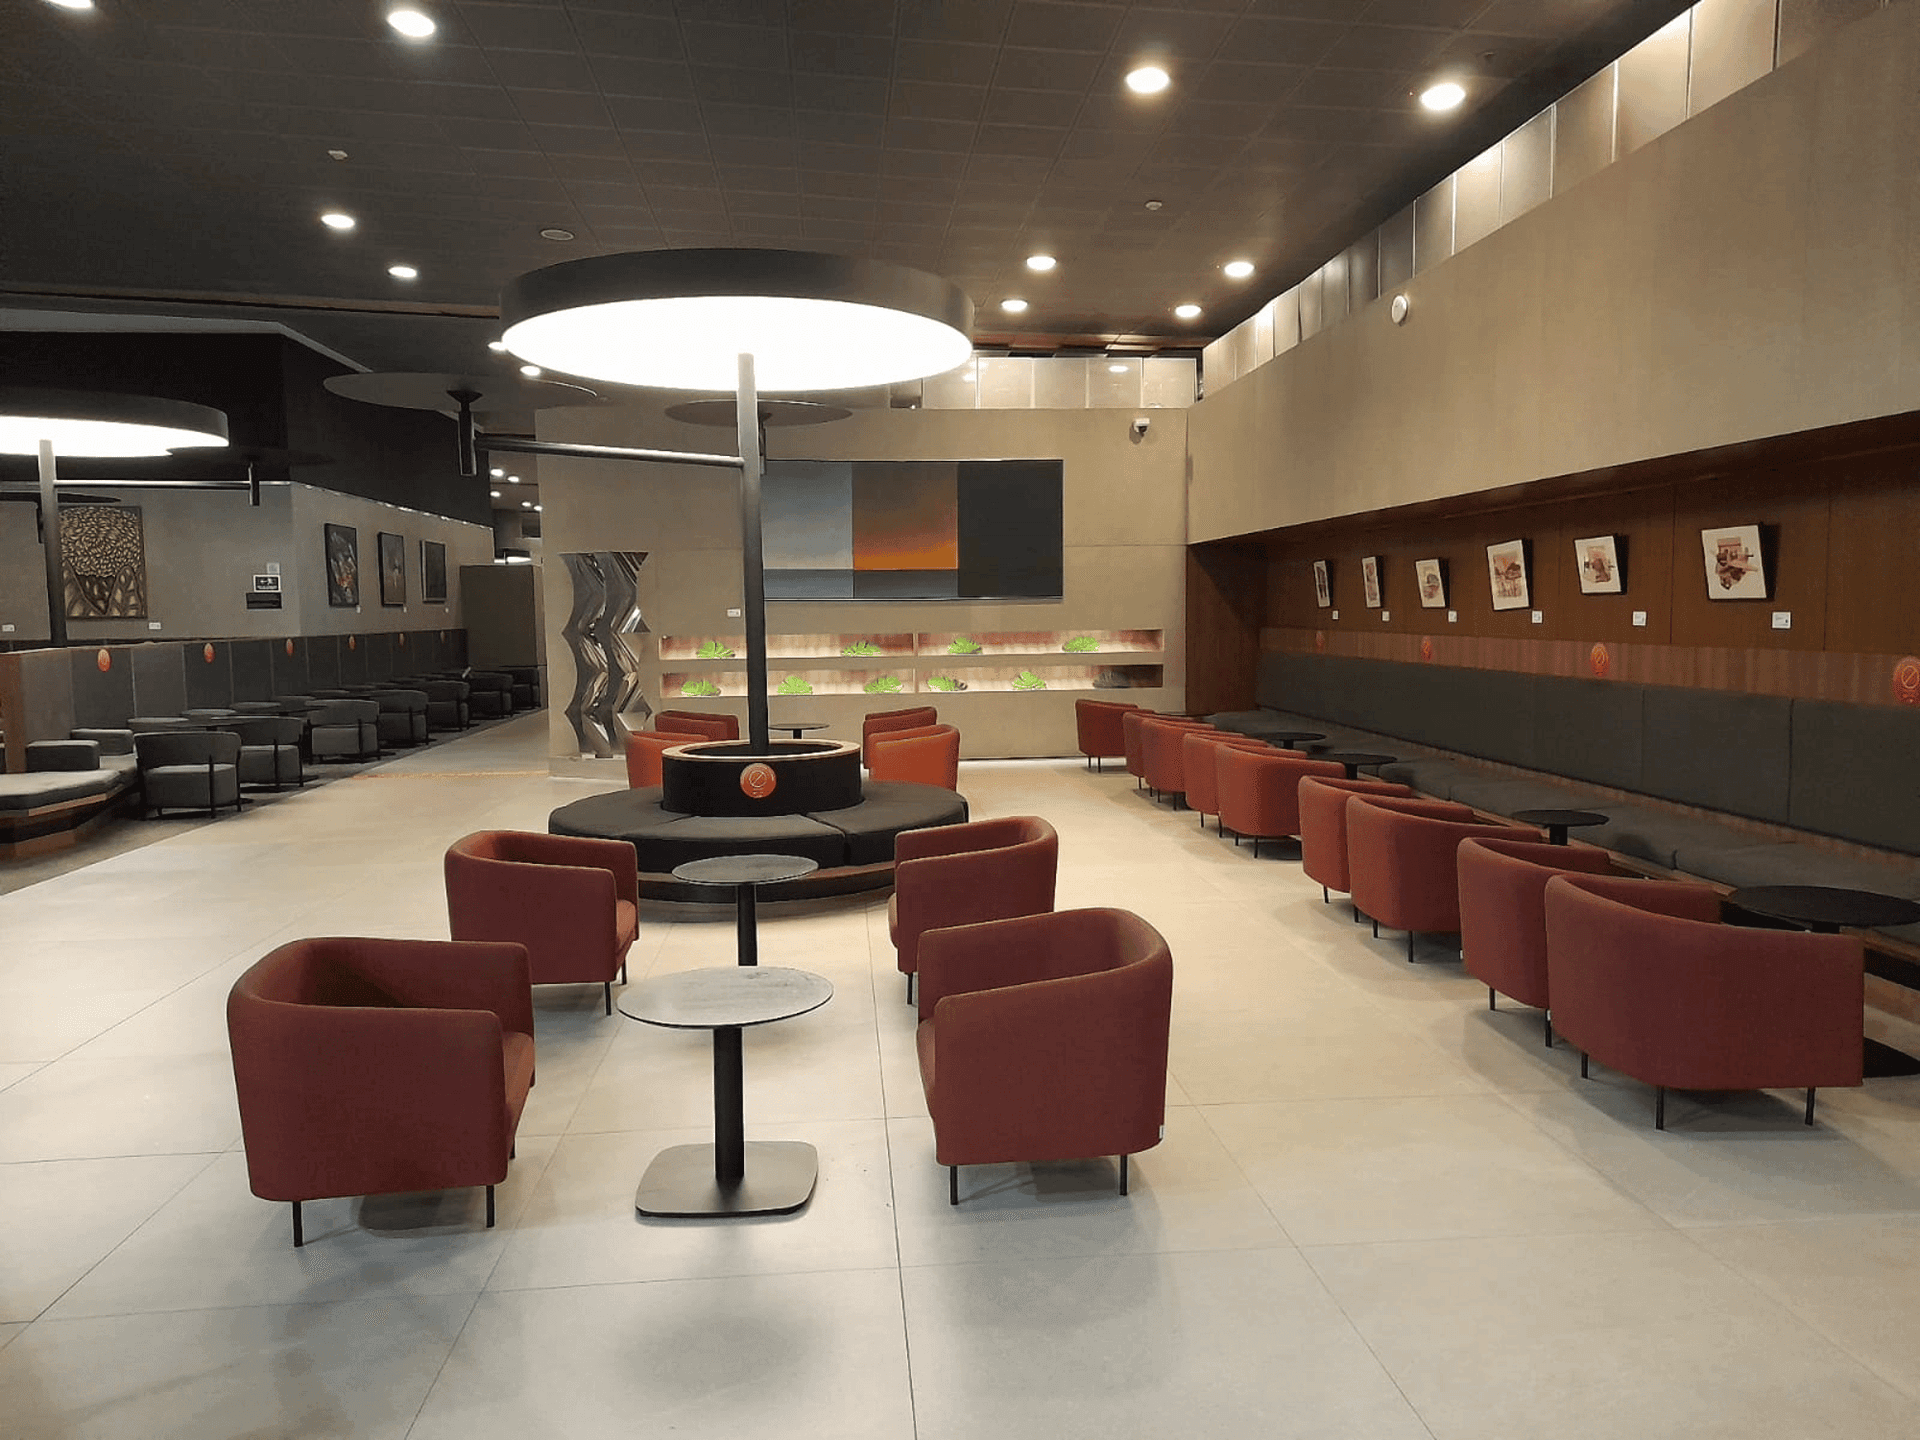 Avianca Lounge Bogota (Domestic) image 22 of 25